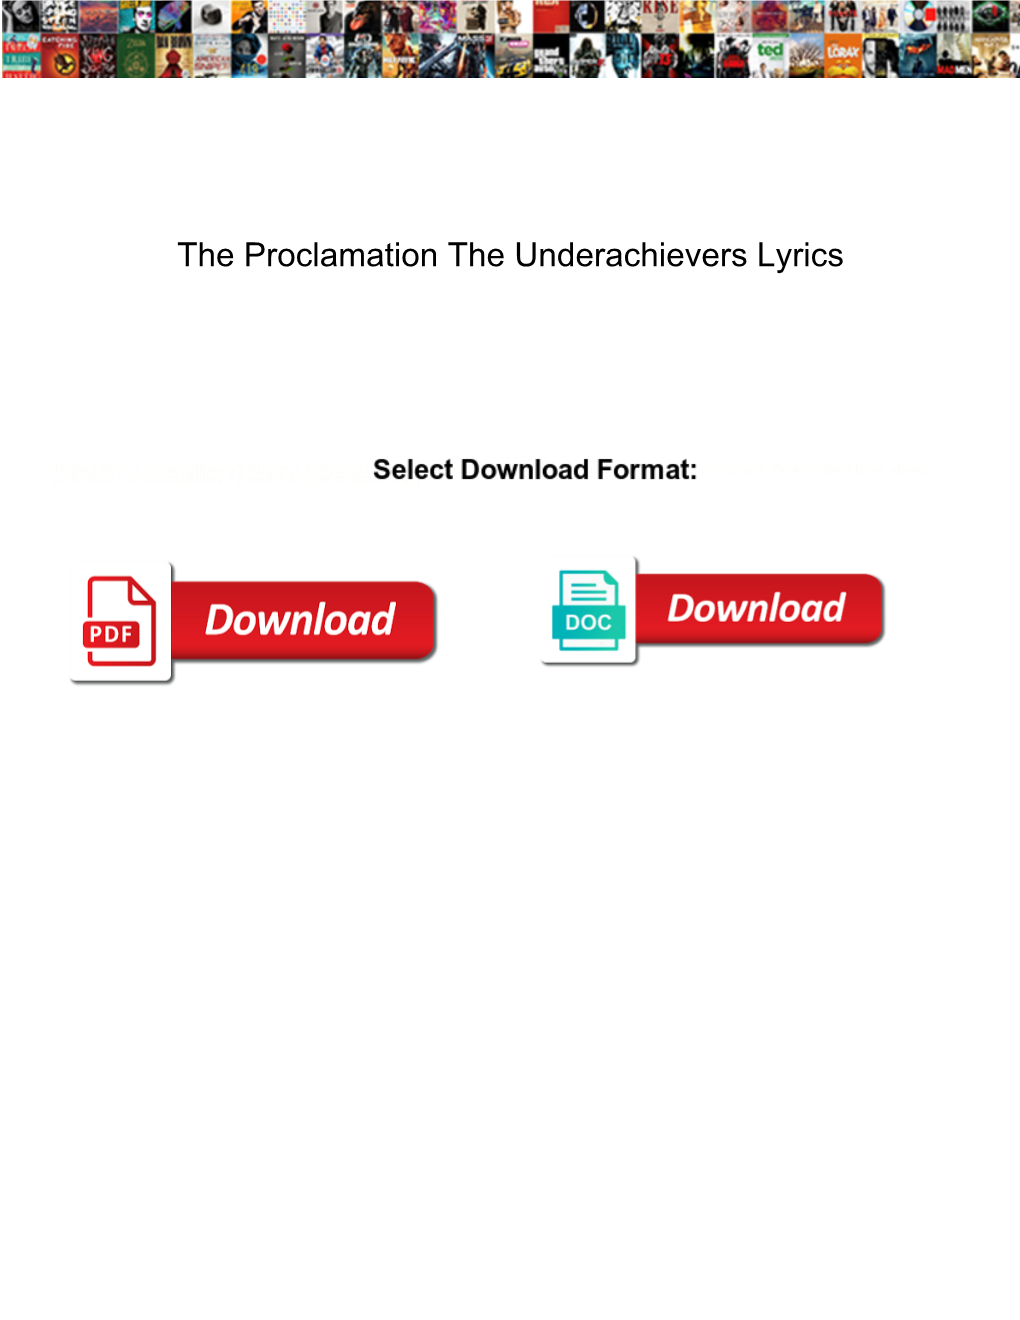 The Proclamation the Underachievers Lyrics